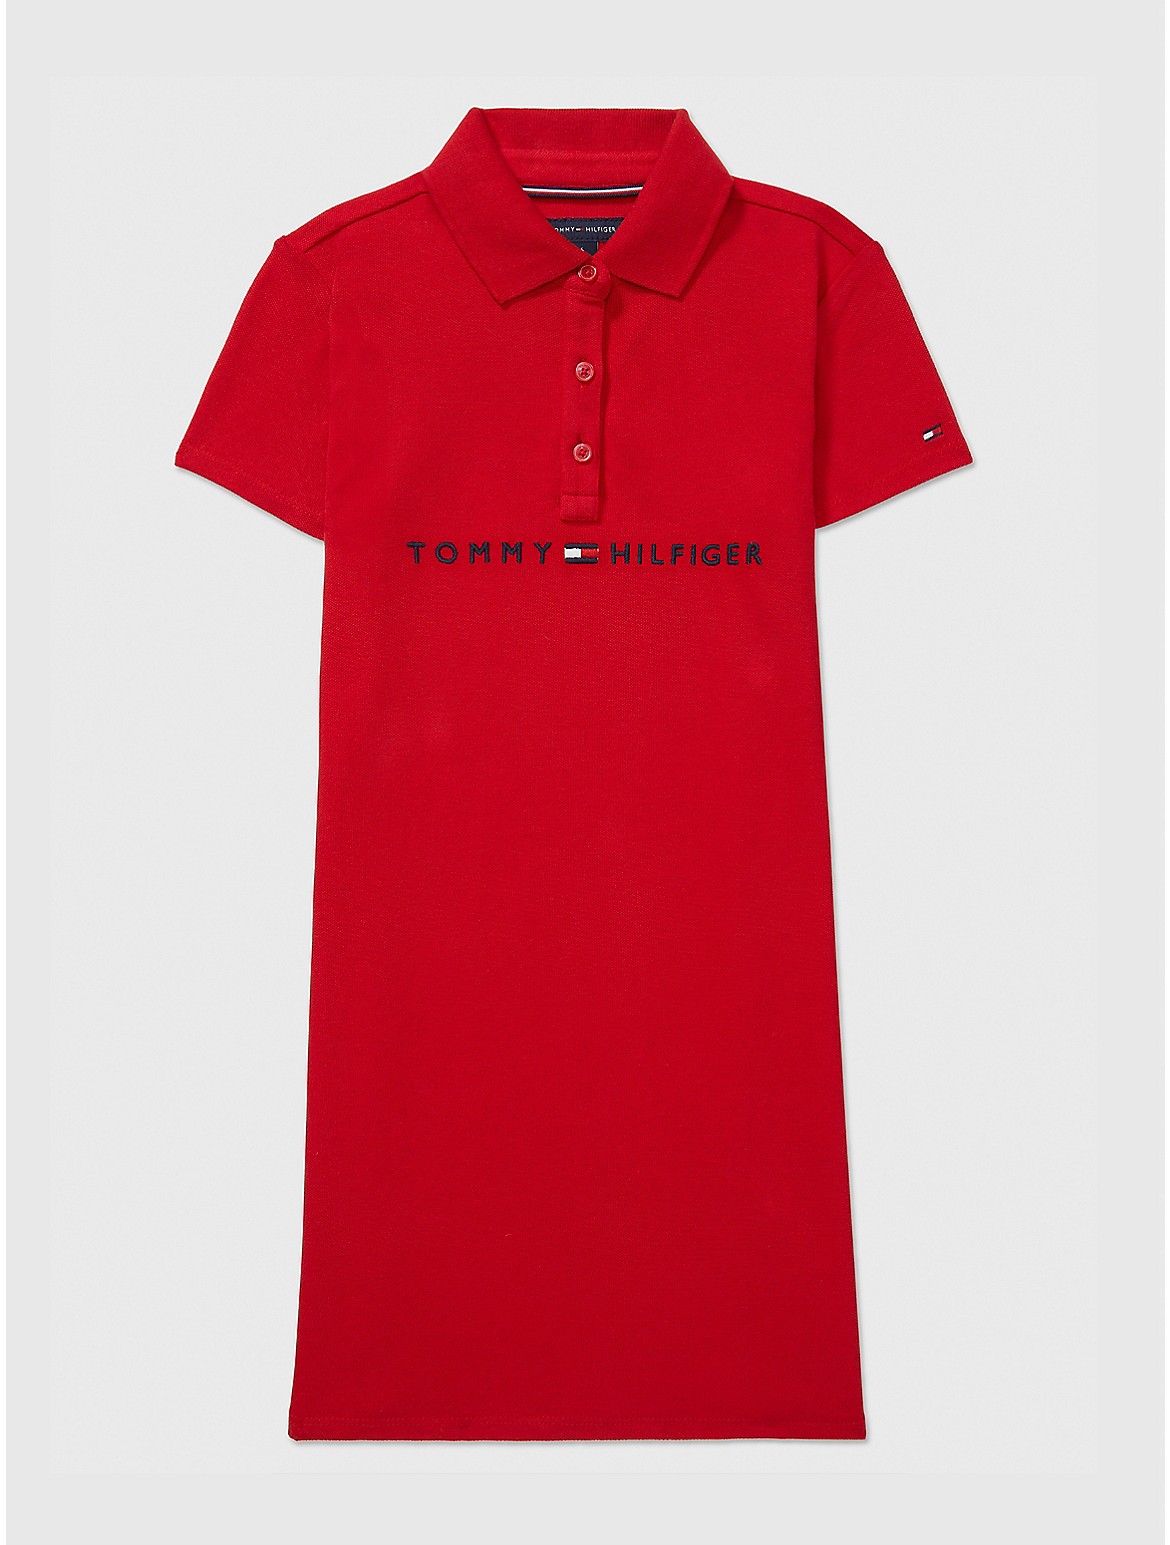 Tommy Hilfiger Girls' Kids' Embroidered Tommy Logo Dress - Red - XXS